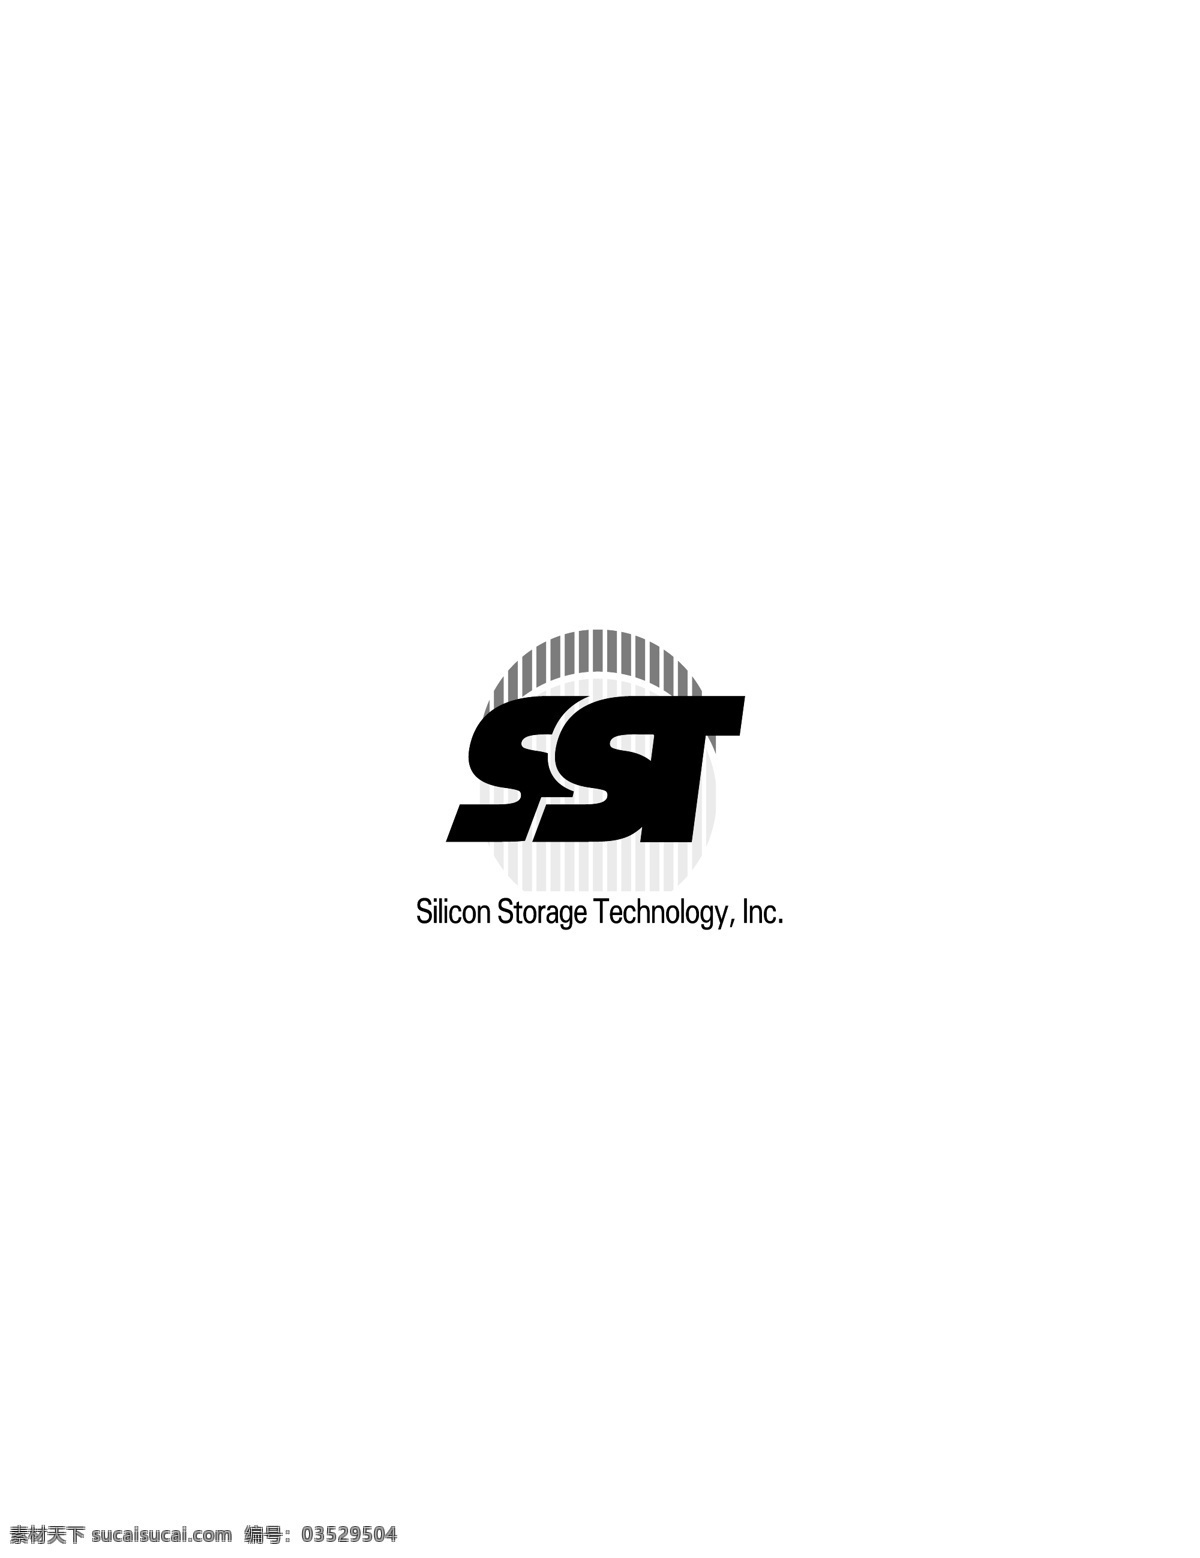 sst logo大全 logo 设计欣赏 商业矢量 矢量下载 国外 知名 公司 标志 范例 标志设计 欣赏 网页矢量 矢量图 其他矢量图